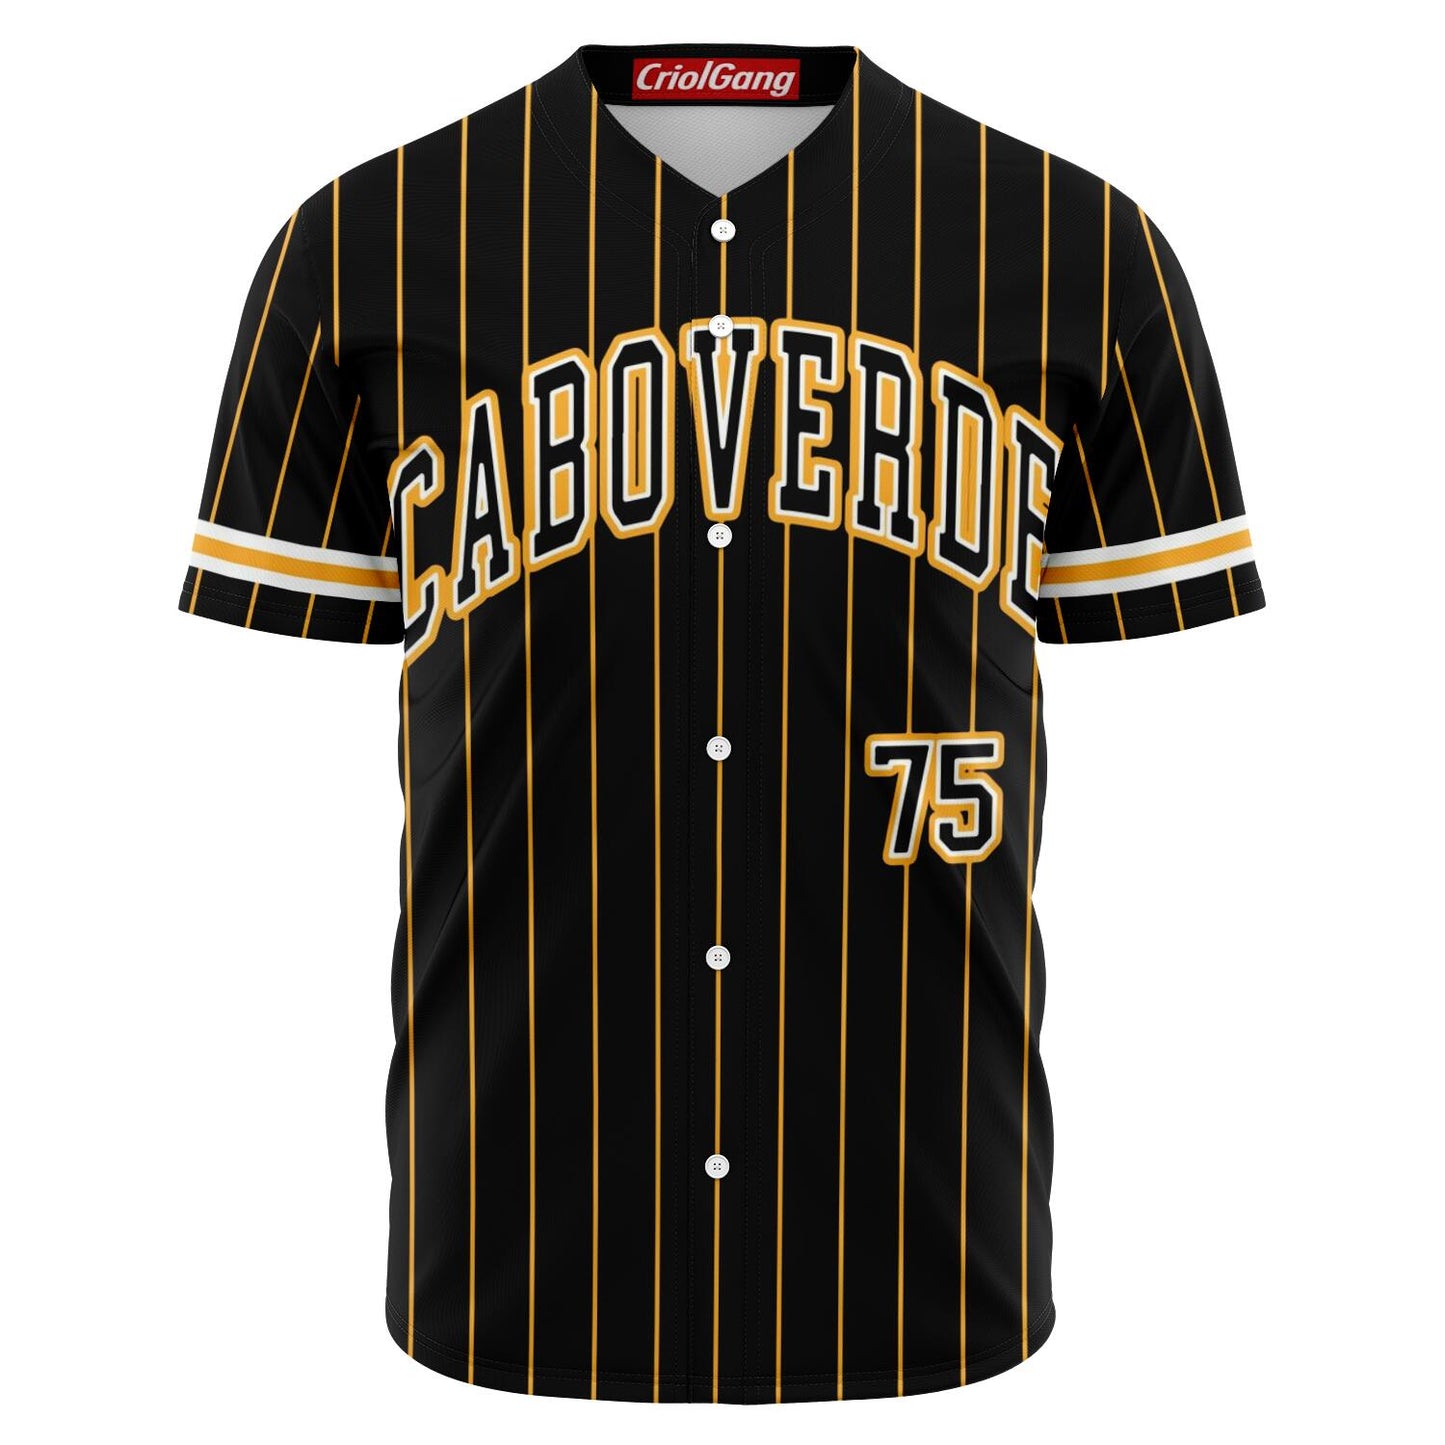 Cabo verde baseball jersey black & yellow "CABOGANG" - CVC Streetwear